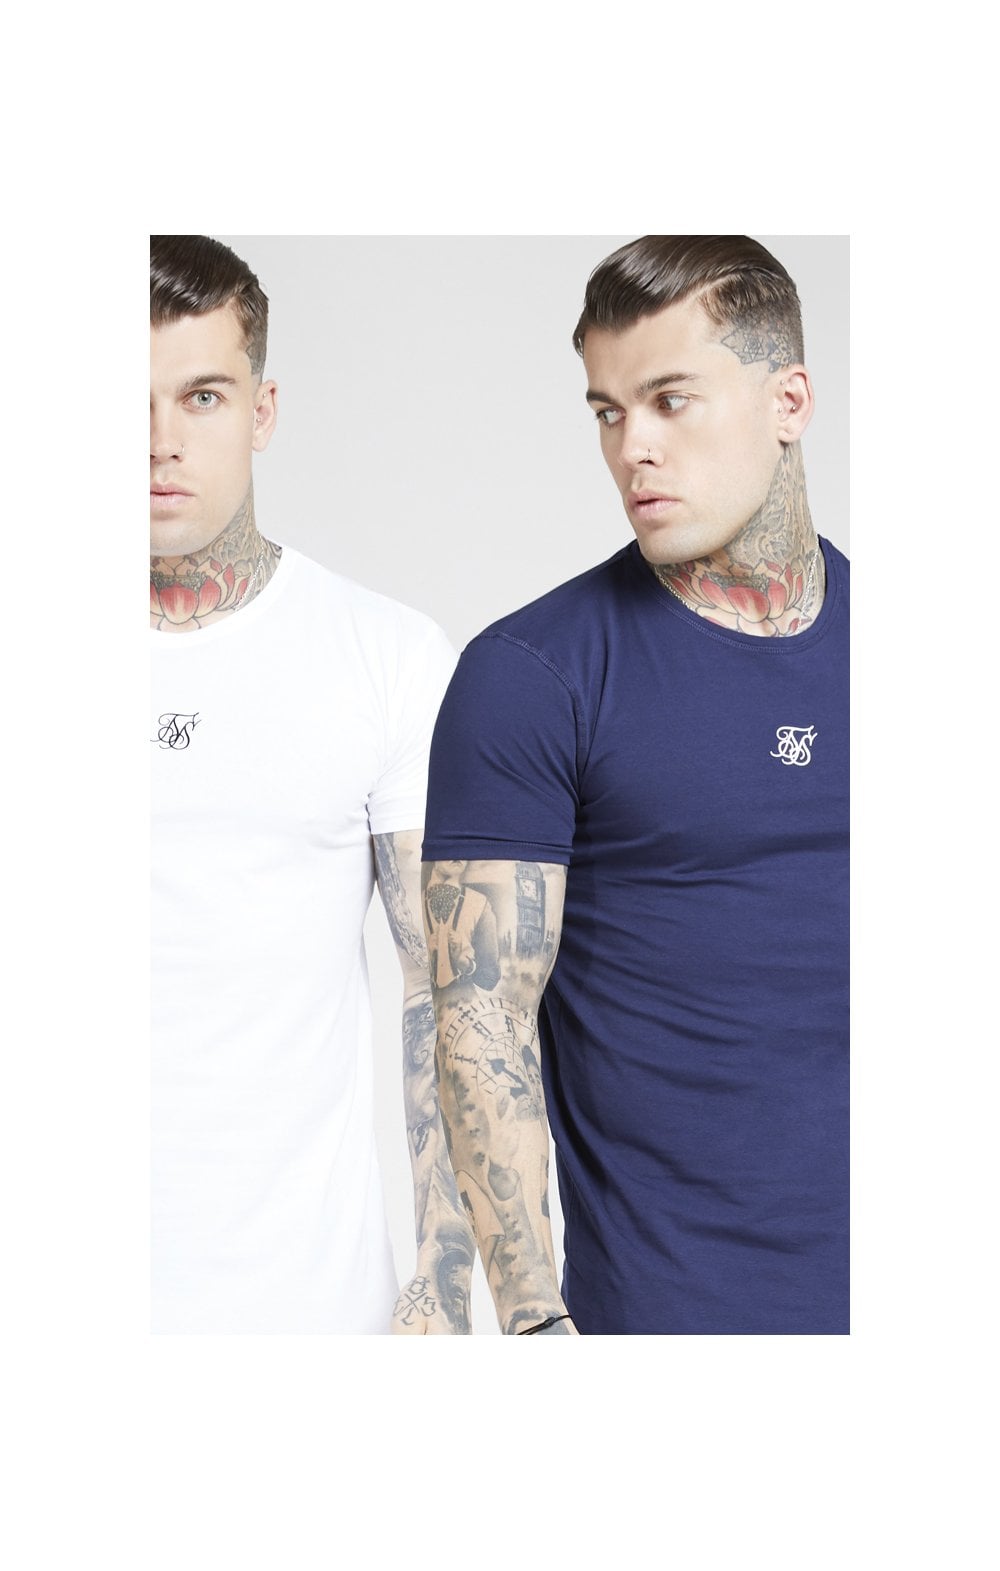 Laad de afbeelding in de Galerij viewer, SikSilk Camiseta Lounge  - Blanco y Azul Marino (Paquete de 2) - 1 Camiseta Blanco y 1 Camiseta Azul Marino